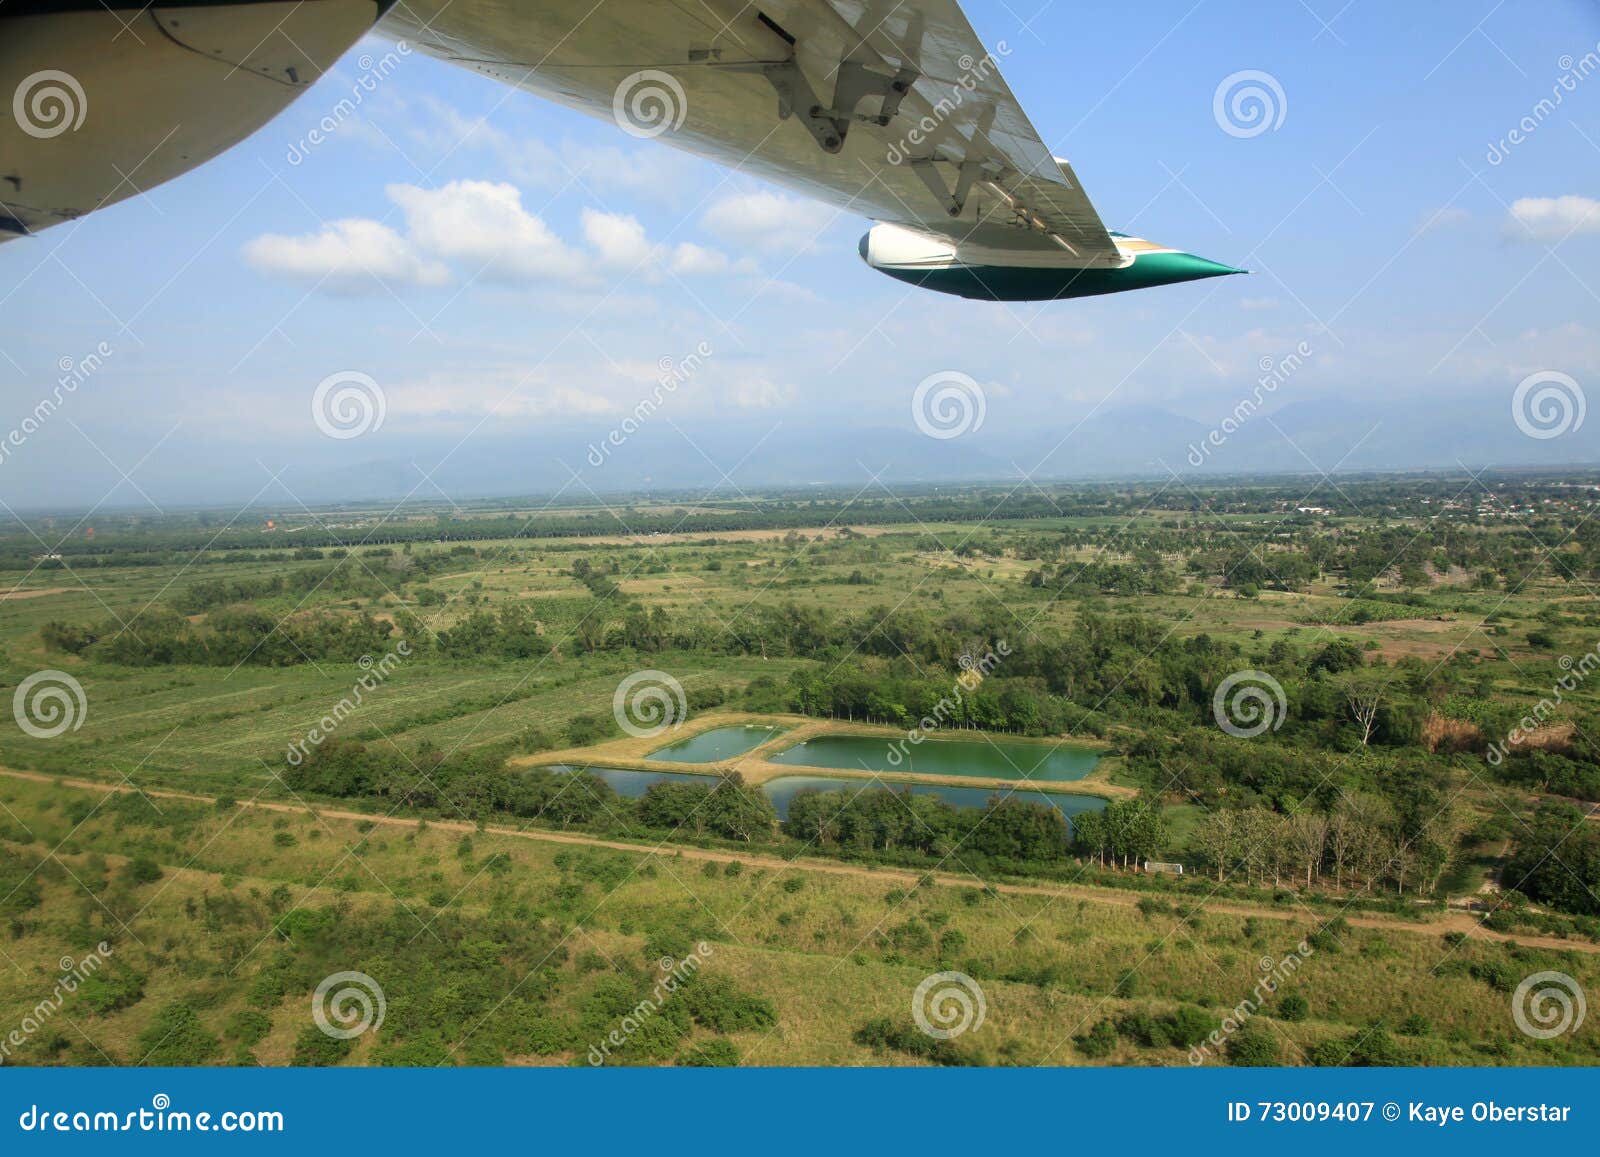 flying over mainland honduras